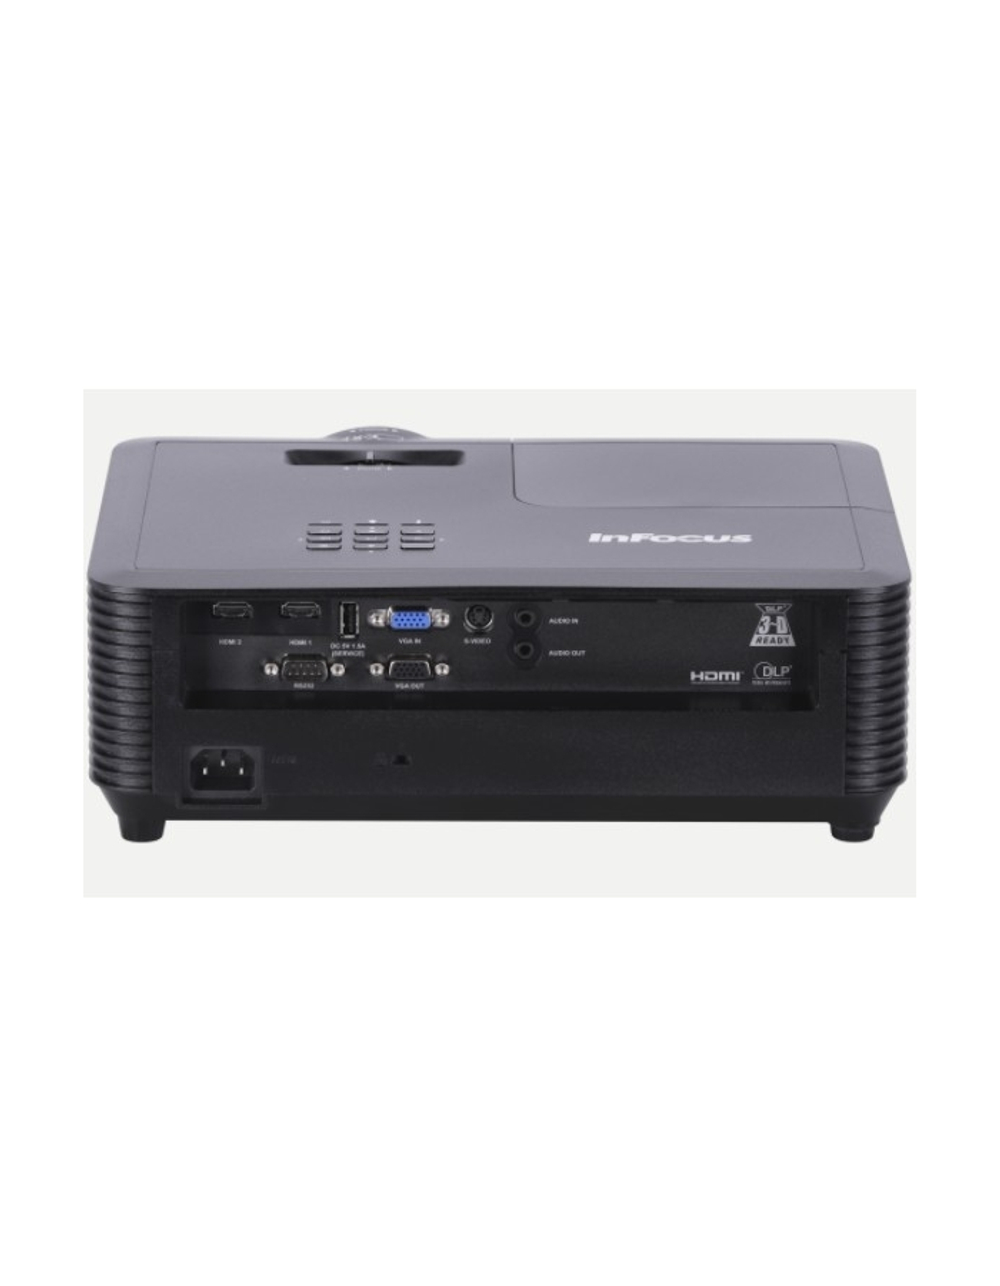 INFOCUS IN118bb ((Full 3D) DLP, 3400 ANSI Lm, Full HD, (1.47-1.62:1), 30000:1, 2xHDMI 1.4, 1VGA in, 1VGA out, S-video, USB-A, 10W, лампа 15000ч., 2.6 кг)